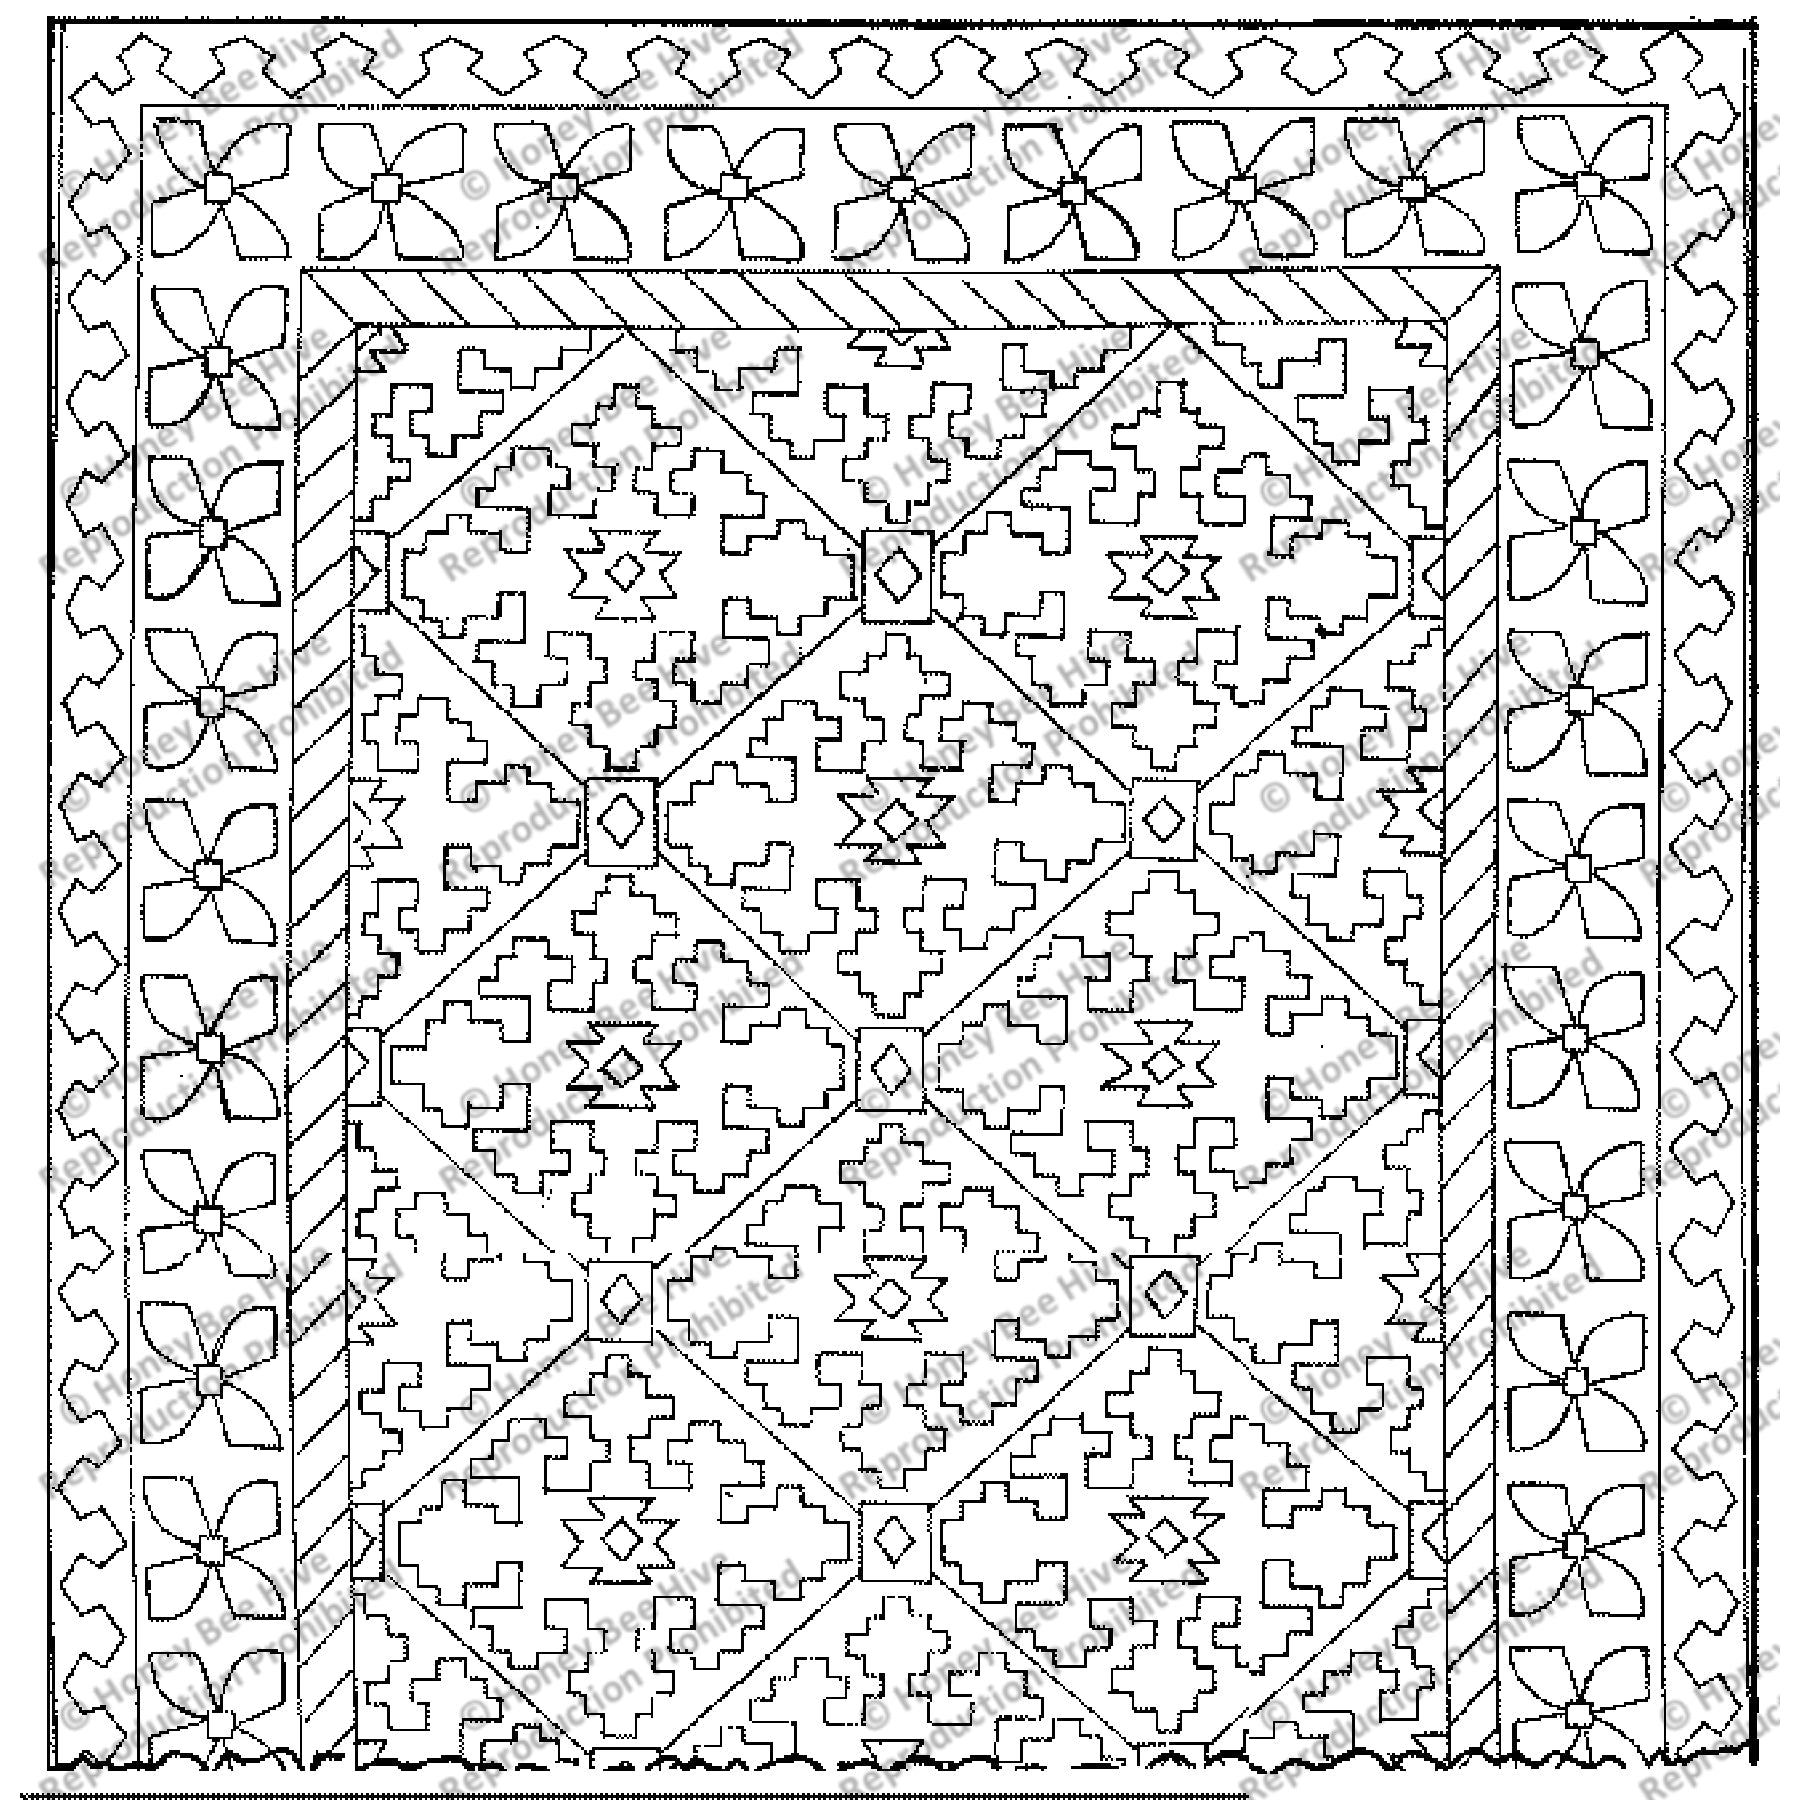 Kurdistan, rug hooking pattern